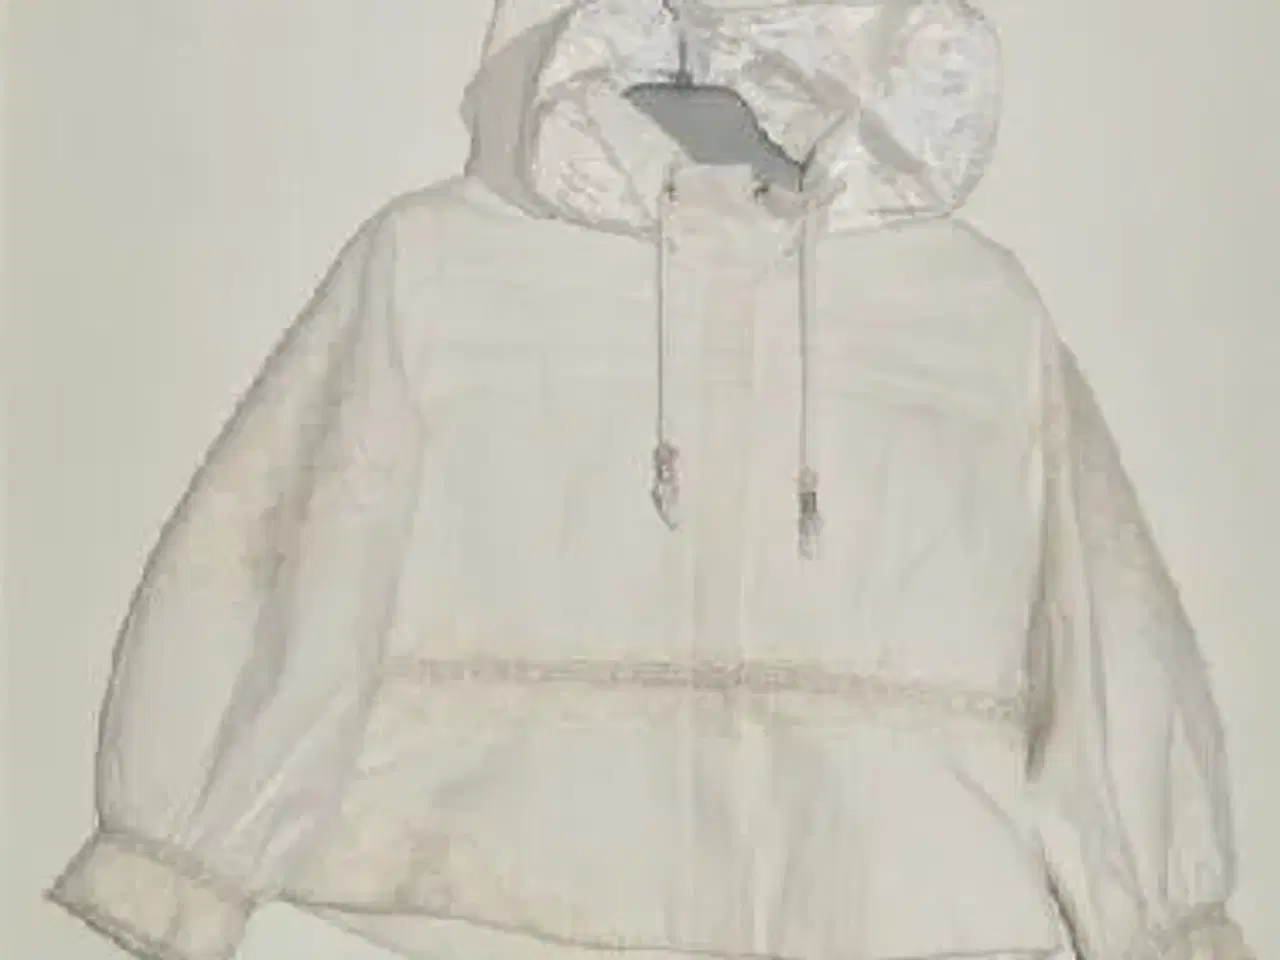 Billede 1 - Ny creme hvid jakke med glimmerstrik 4 å